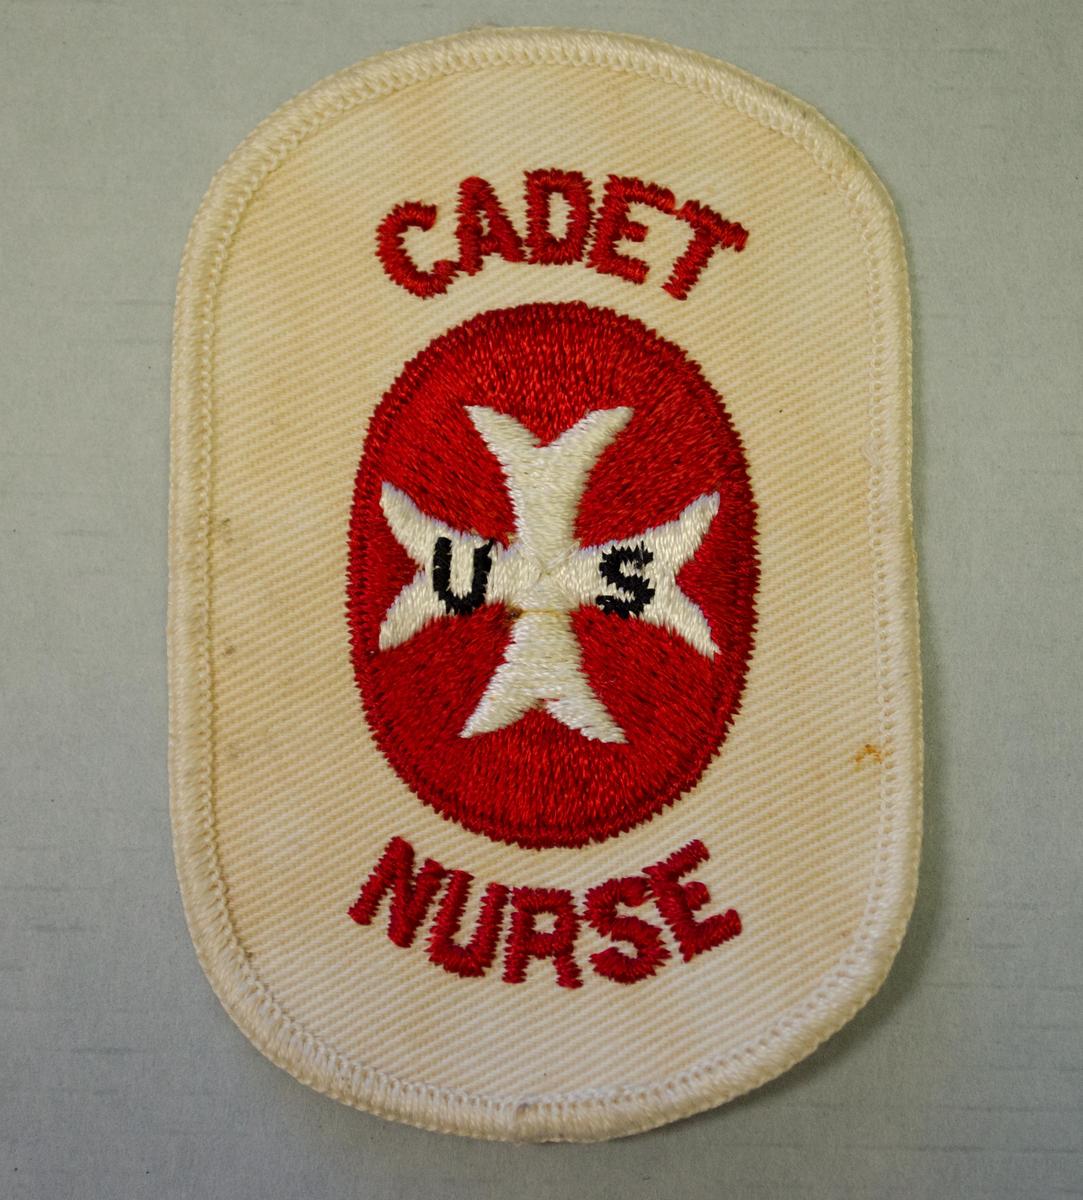 Cadet Nurse Corps patch, c. 1943